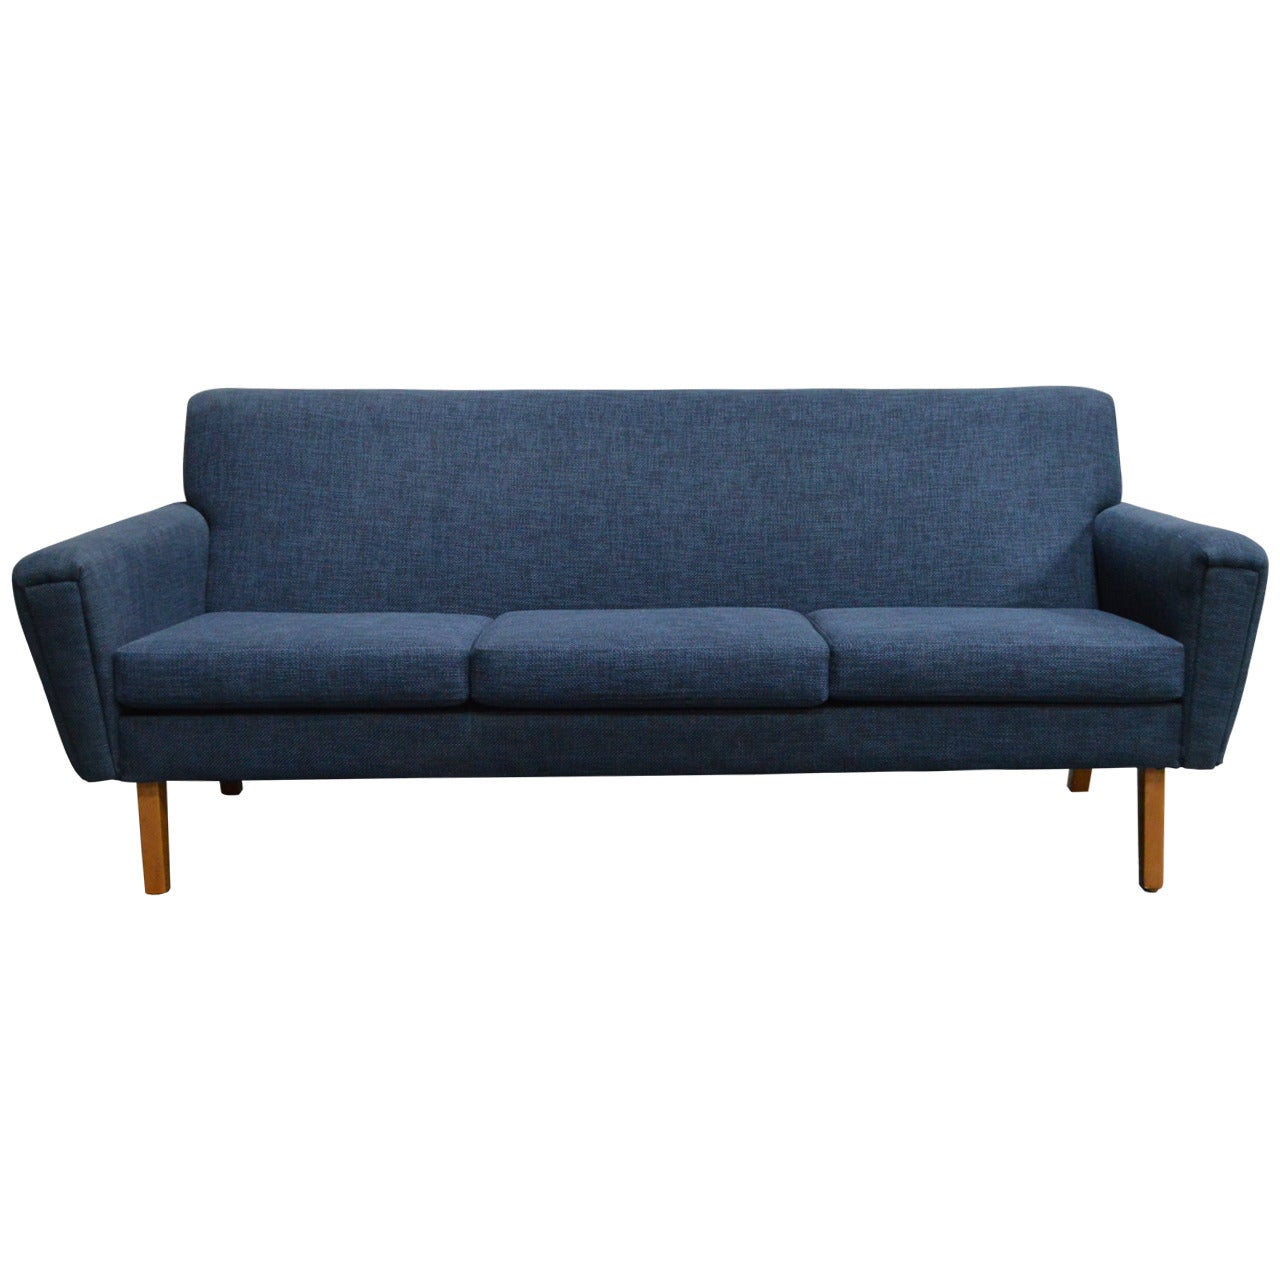 Swedish Mid-Century Modern Blue Sofa